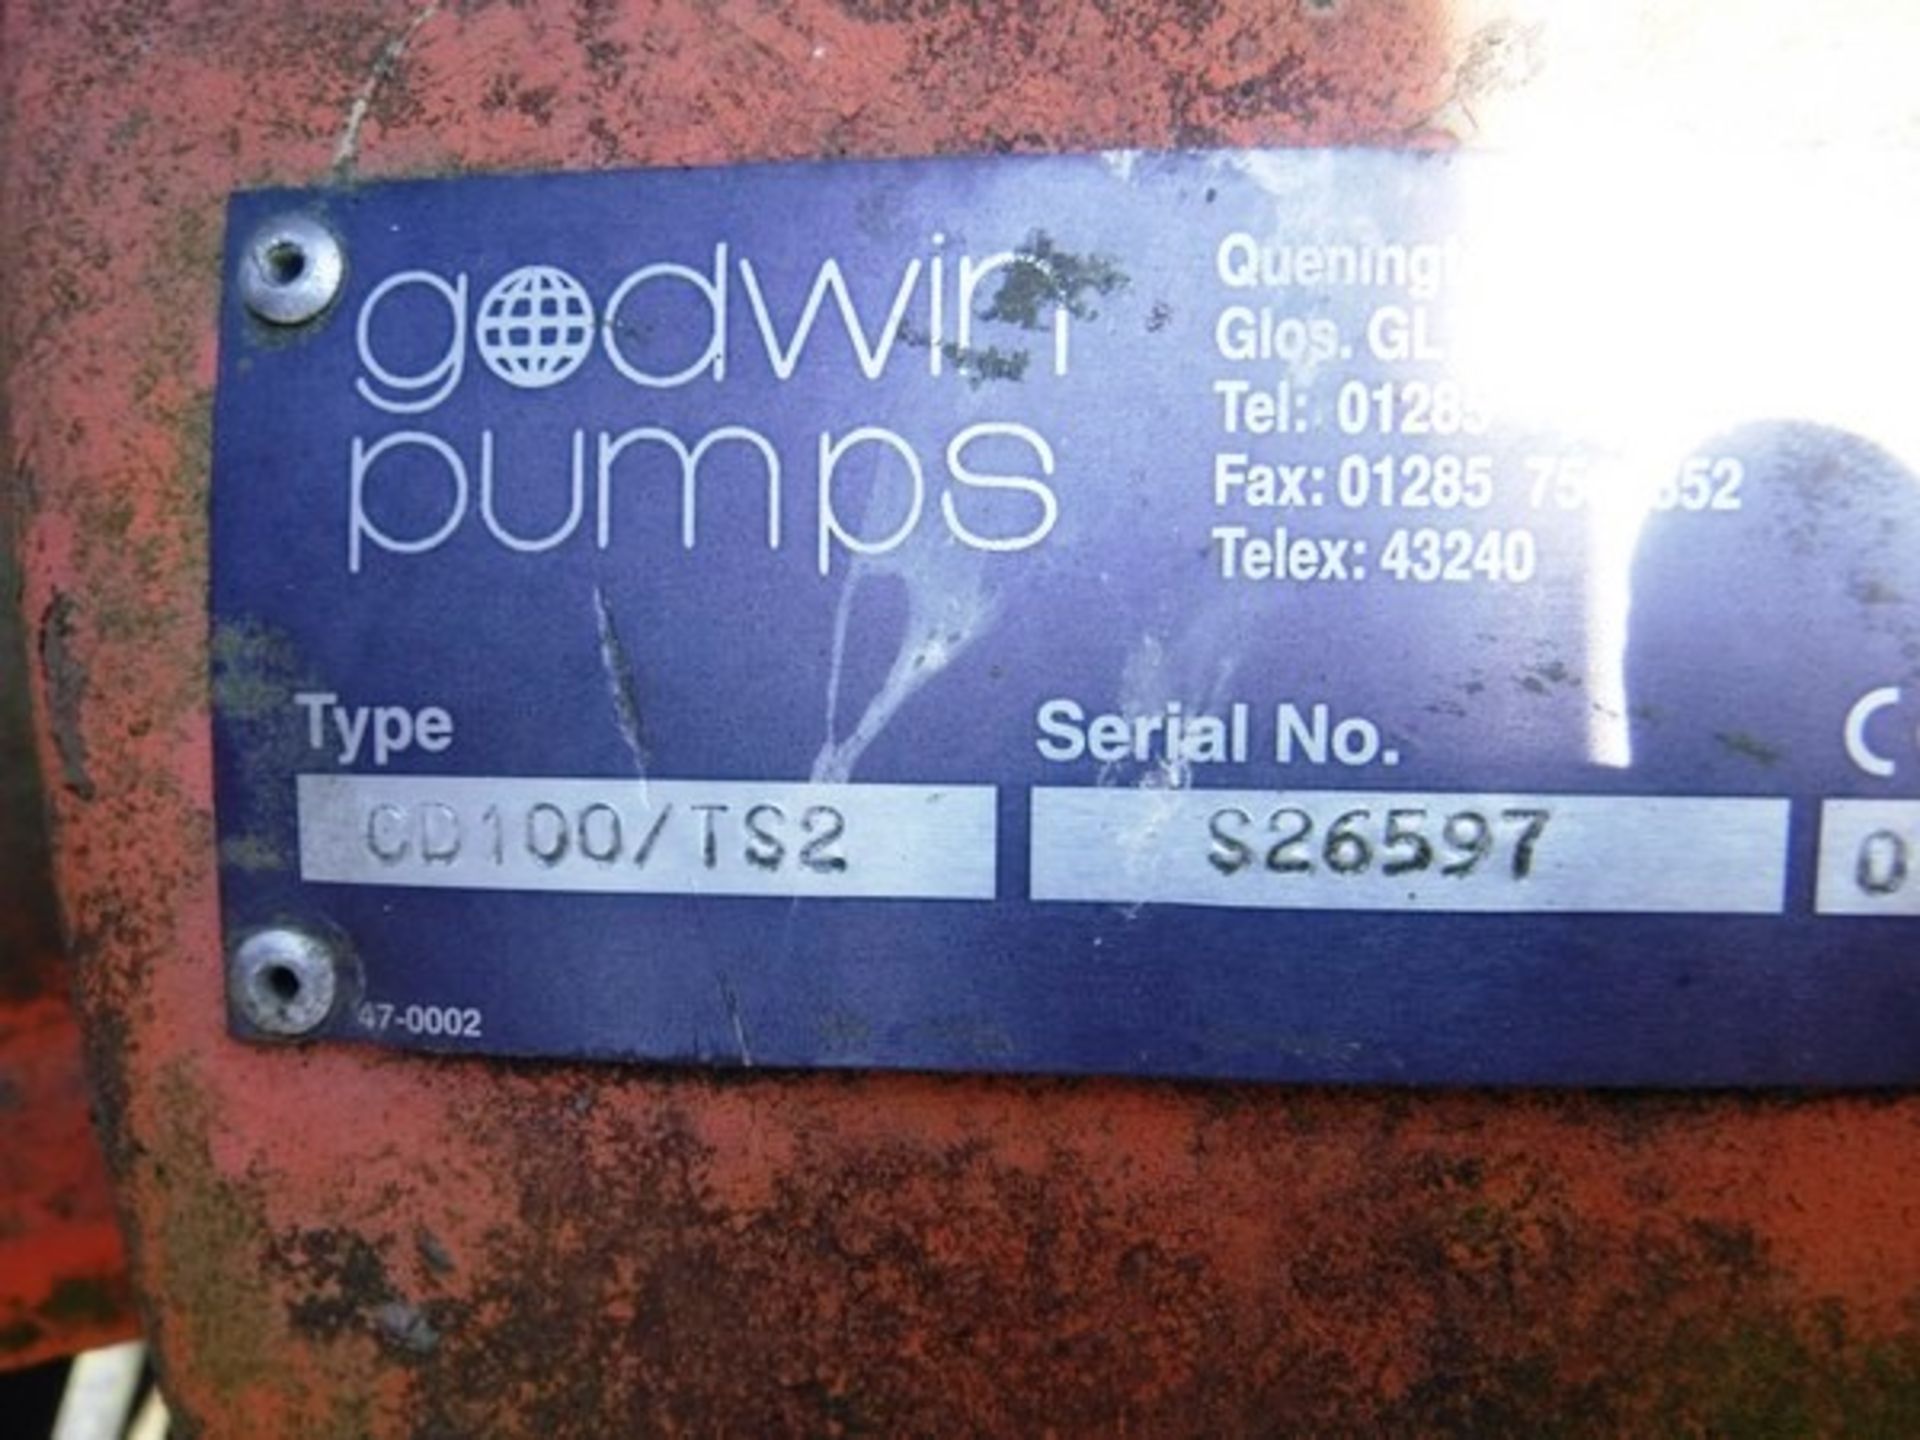 2001 GODWIN 0D100/TS2 engine driven water pump s/n S26597 fl no PO388. 4663 hrs (not verified) - Image 4 of 8